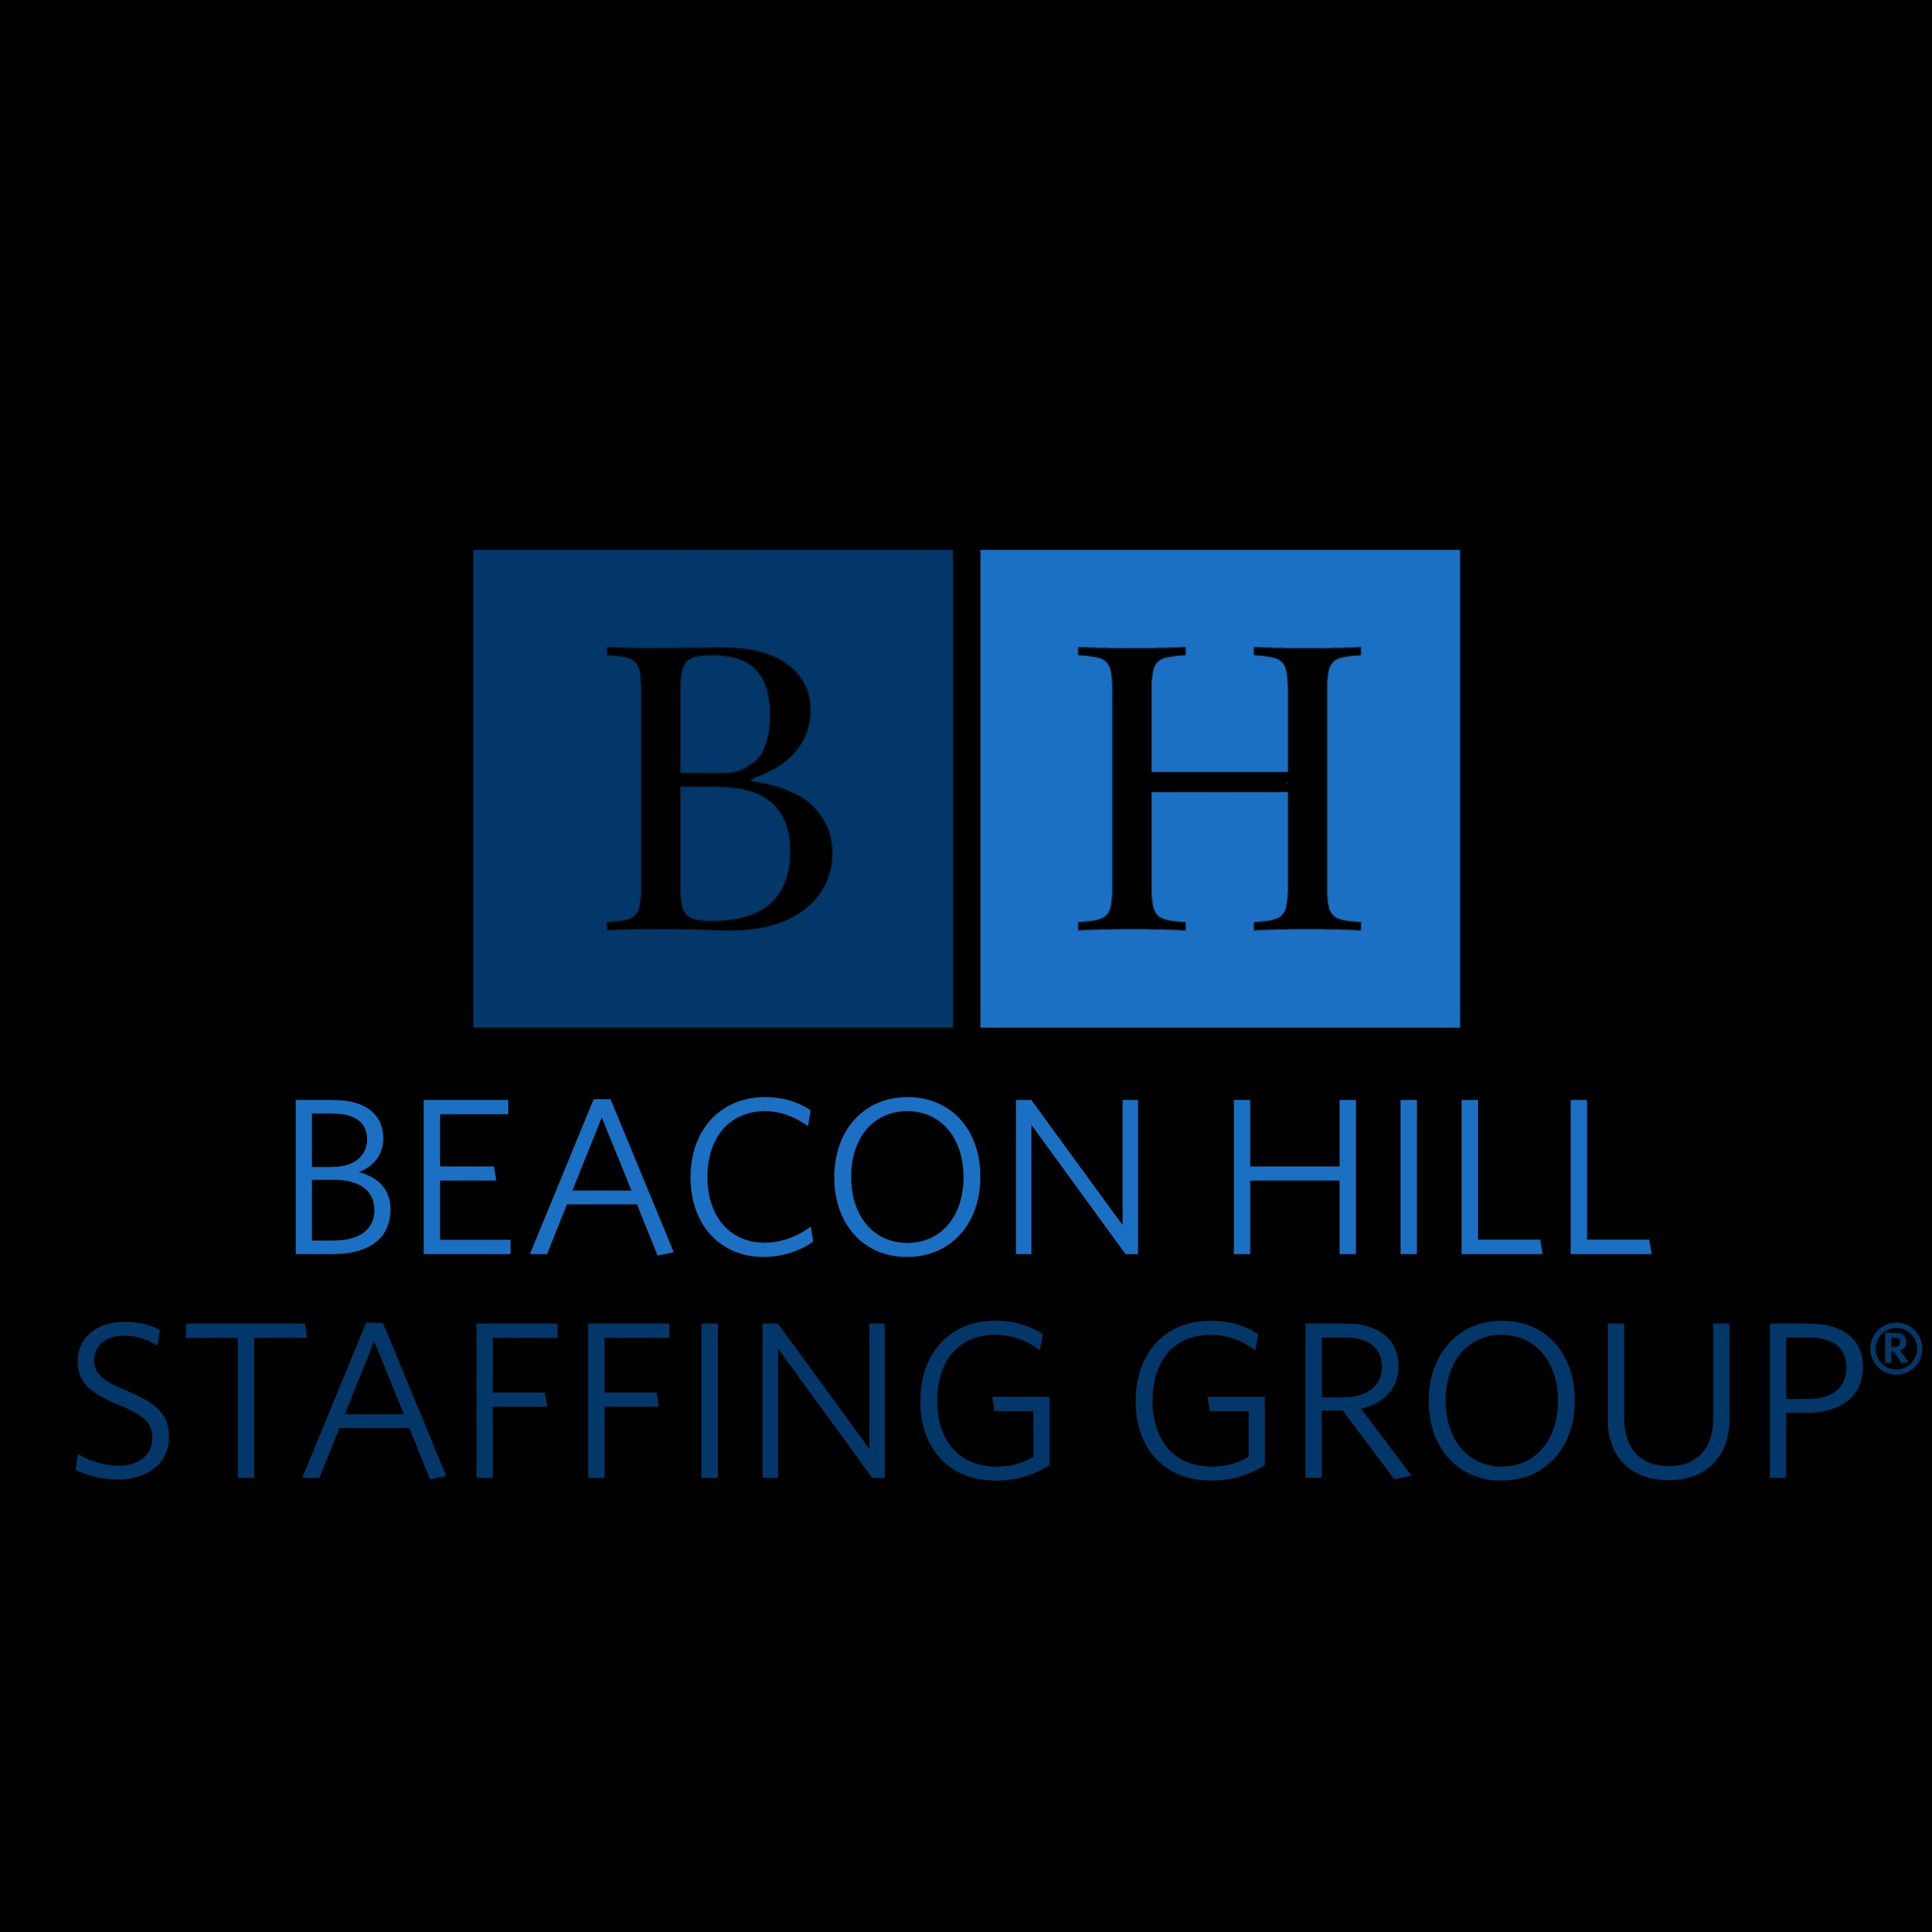 Beacon Hill Staffing Group - Atlanta, GA 30346 - (770)663-0099 | ShowMeLocal.com